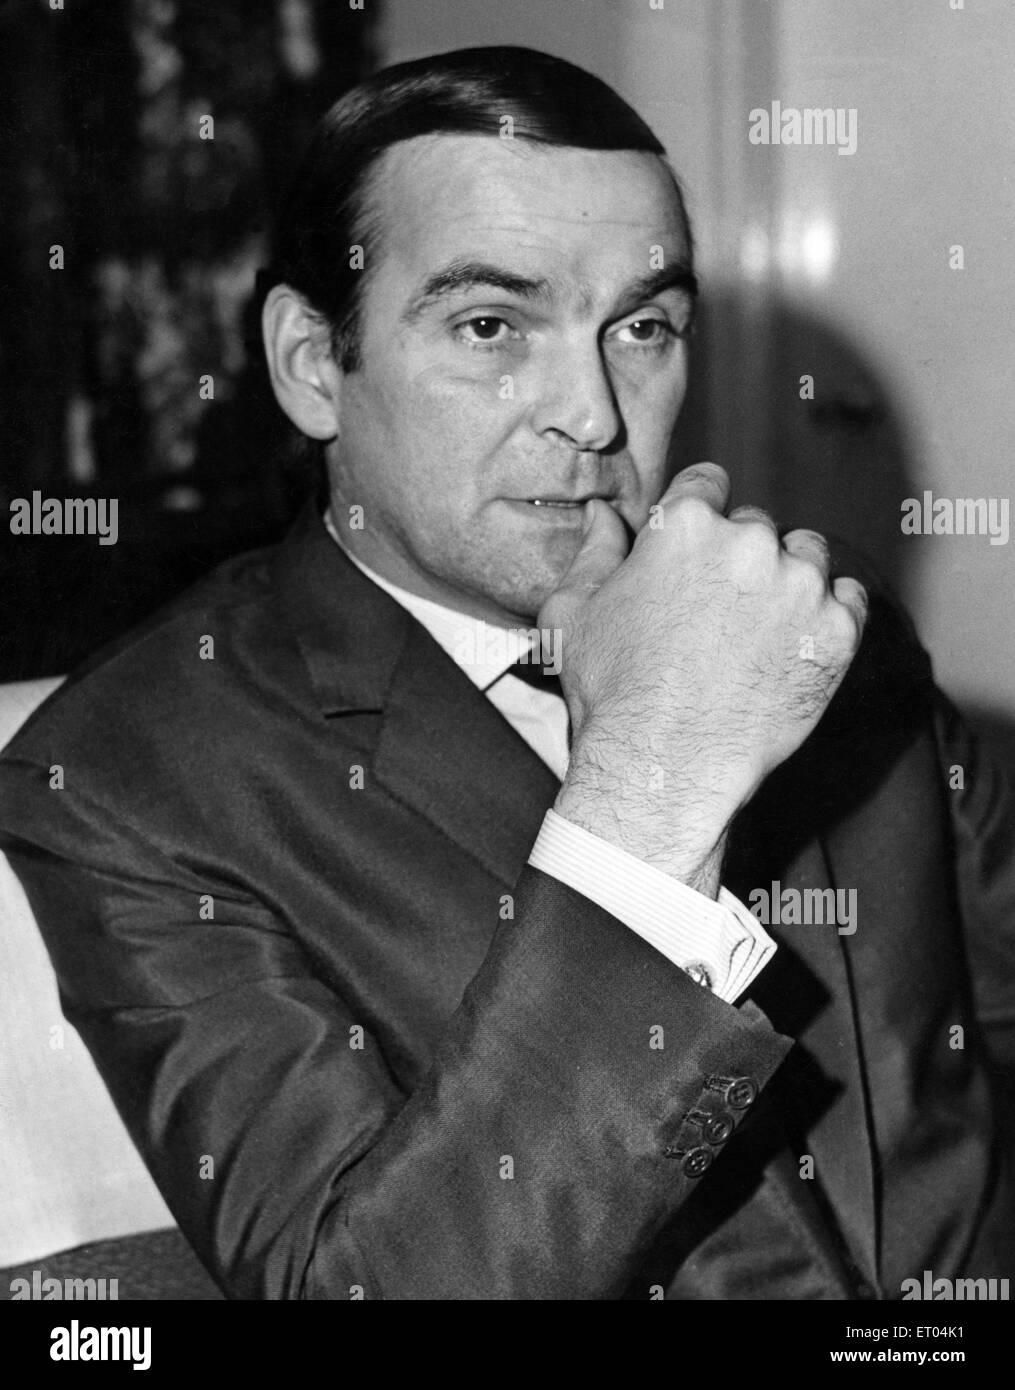 Welsh actor Stanley Baker, April 1964. Stock Photo